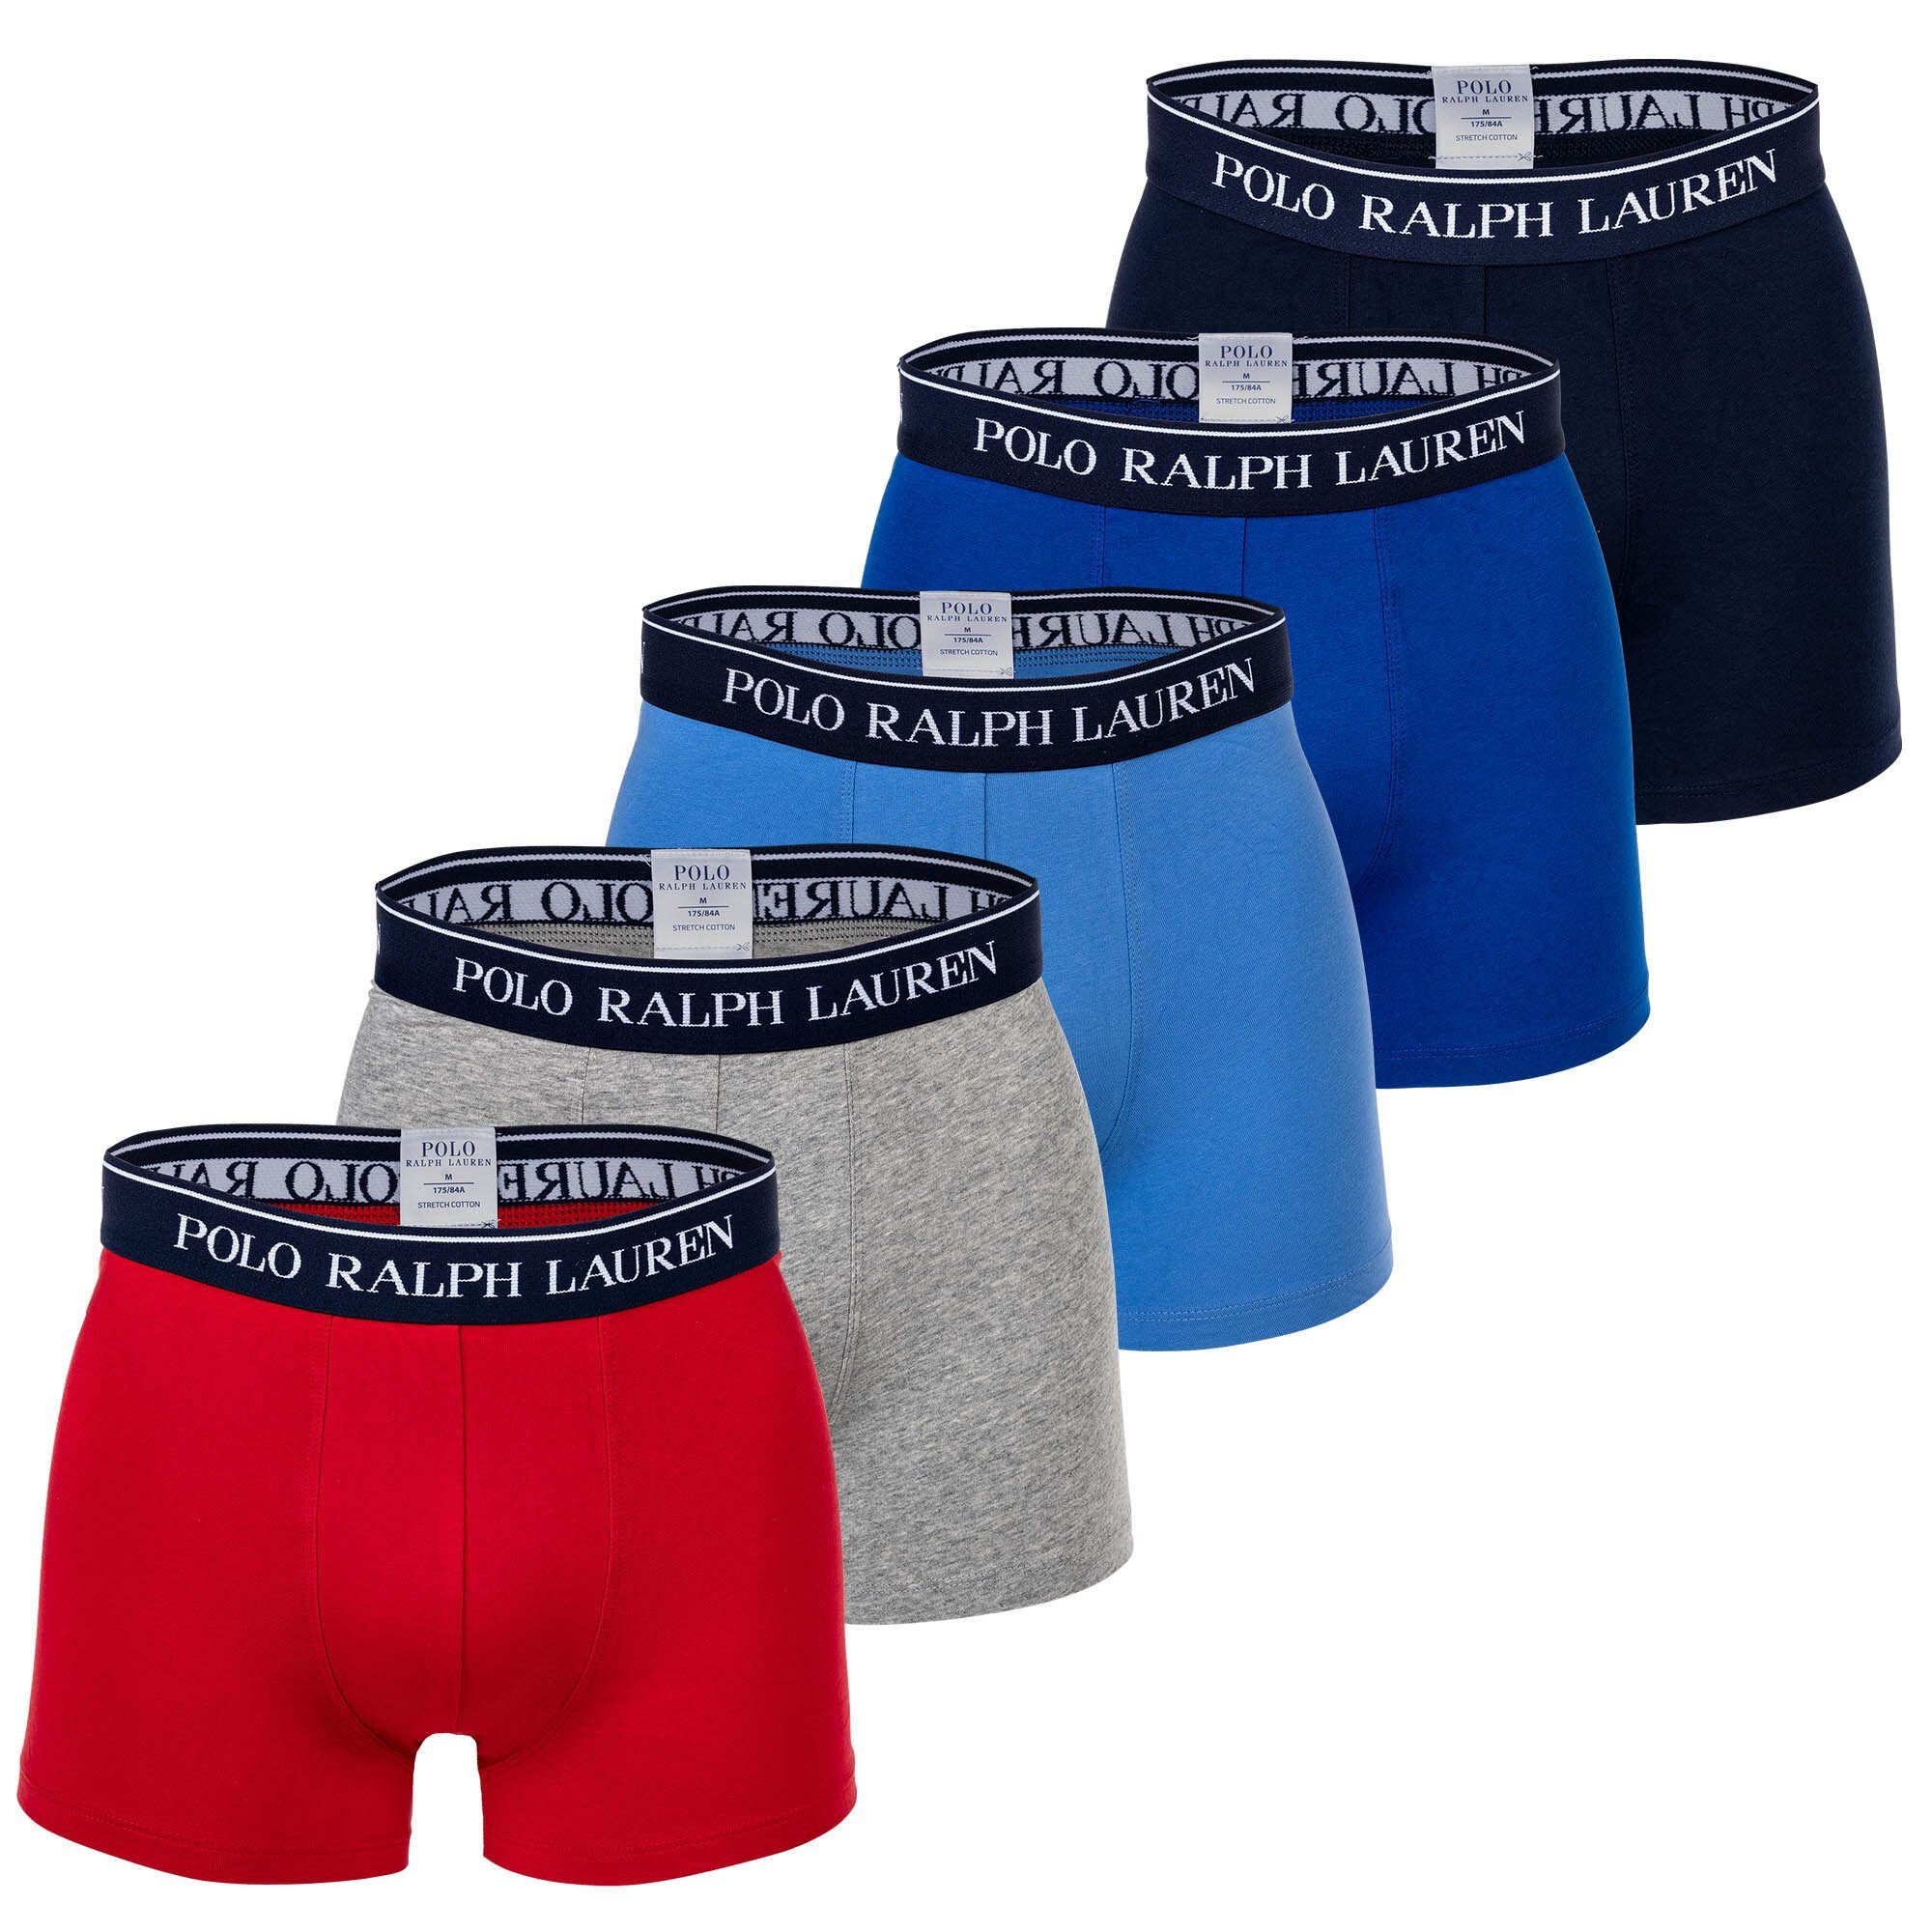 Polo Ralph Lauren Boxer Herren Boxer Shorts, 5er Pack - CLSSIC TRUNK-5 Blau/Rot/Grau | Boxershorts